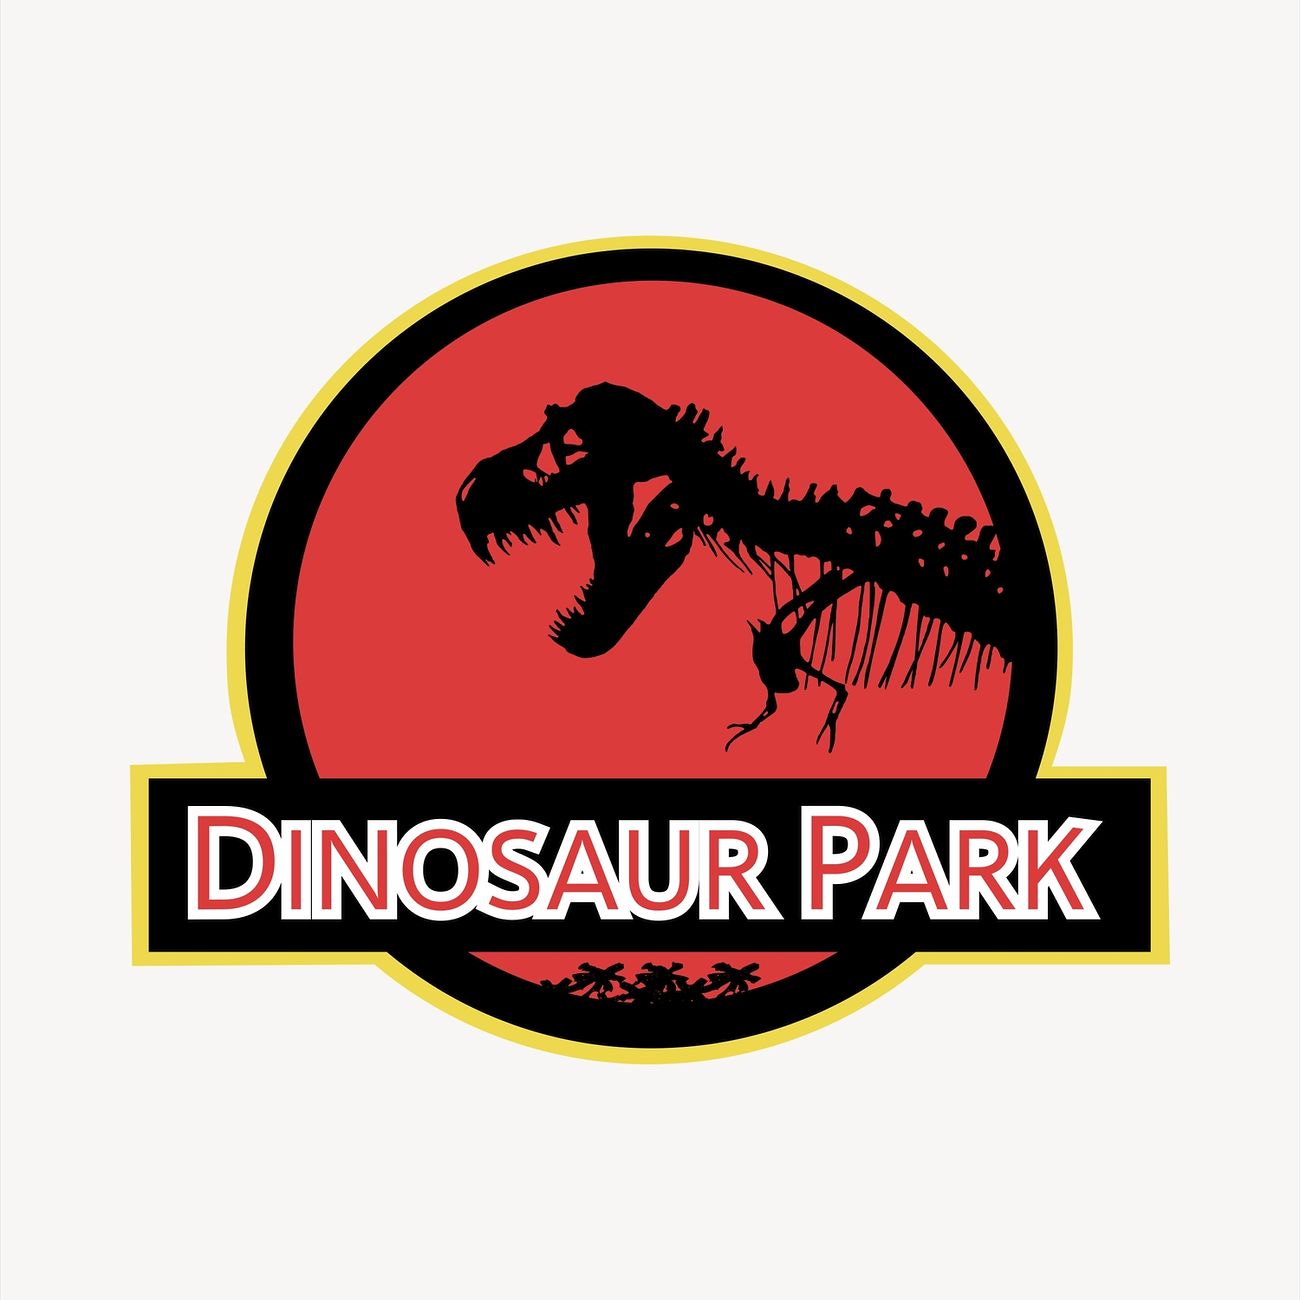 Dinosaur park sign collage element